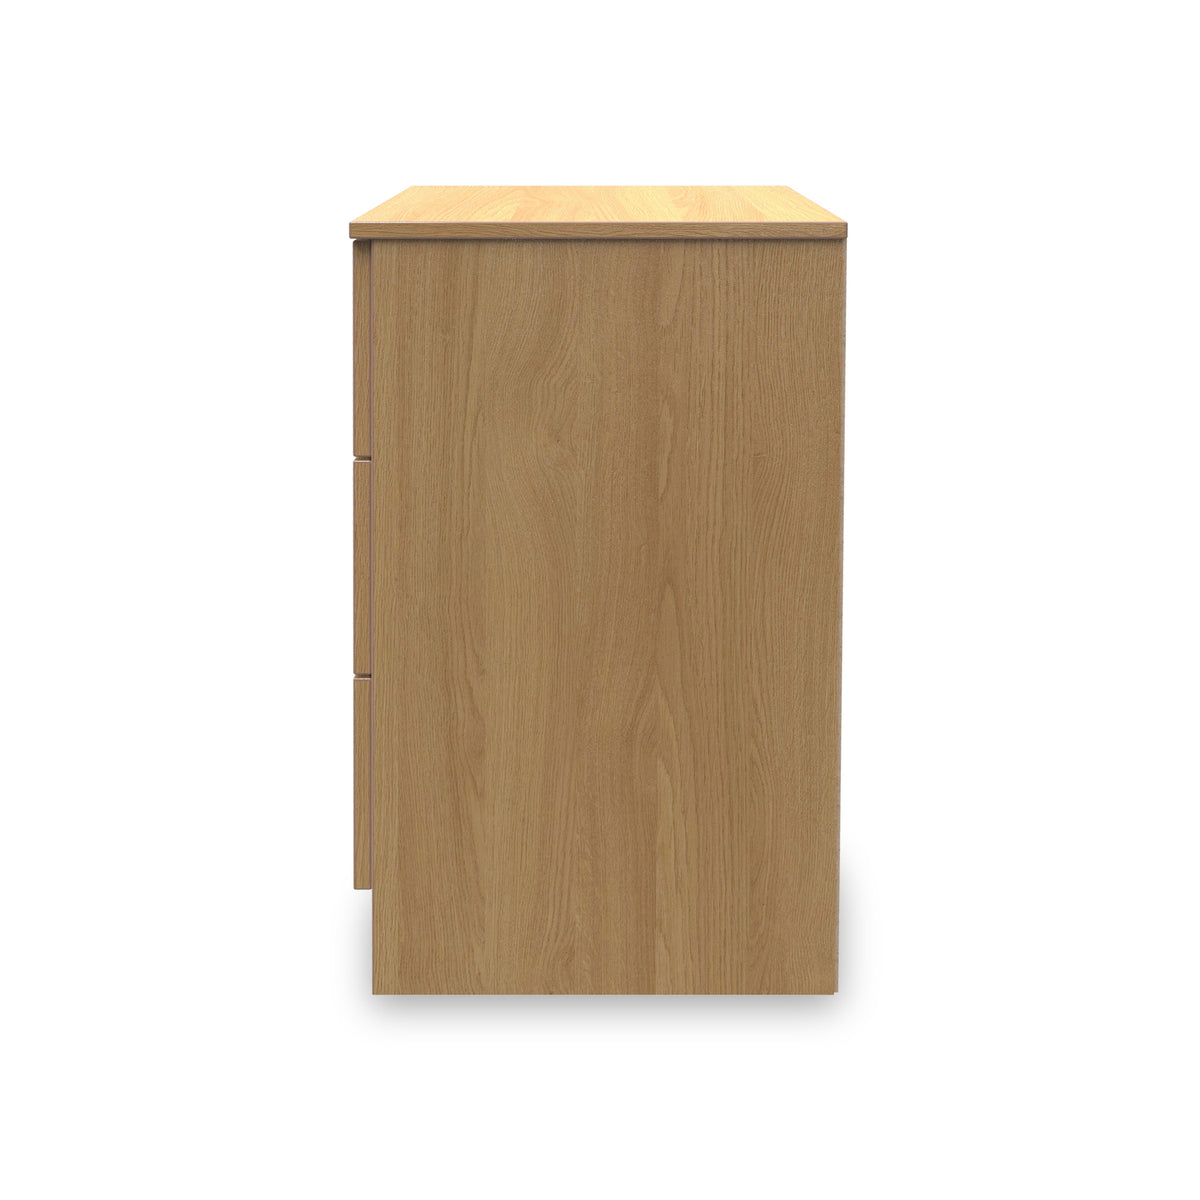 Kilgarth Modern Oak 3 Drawer Bedside with Wireless Charging by Roseland Furniture